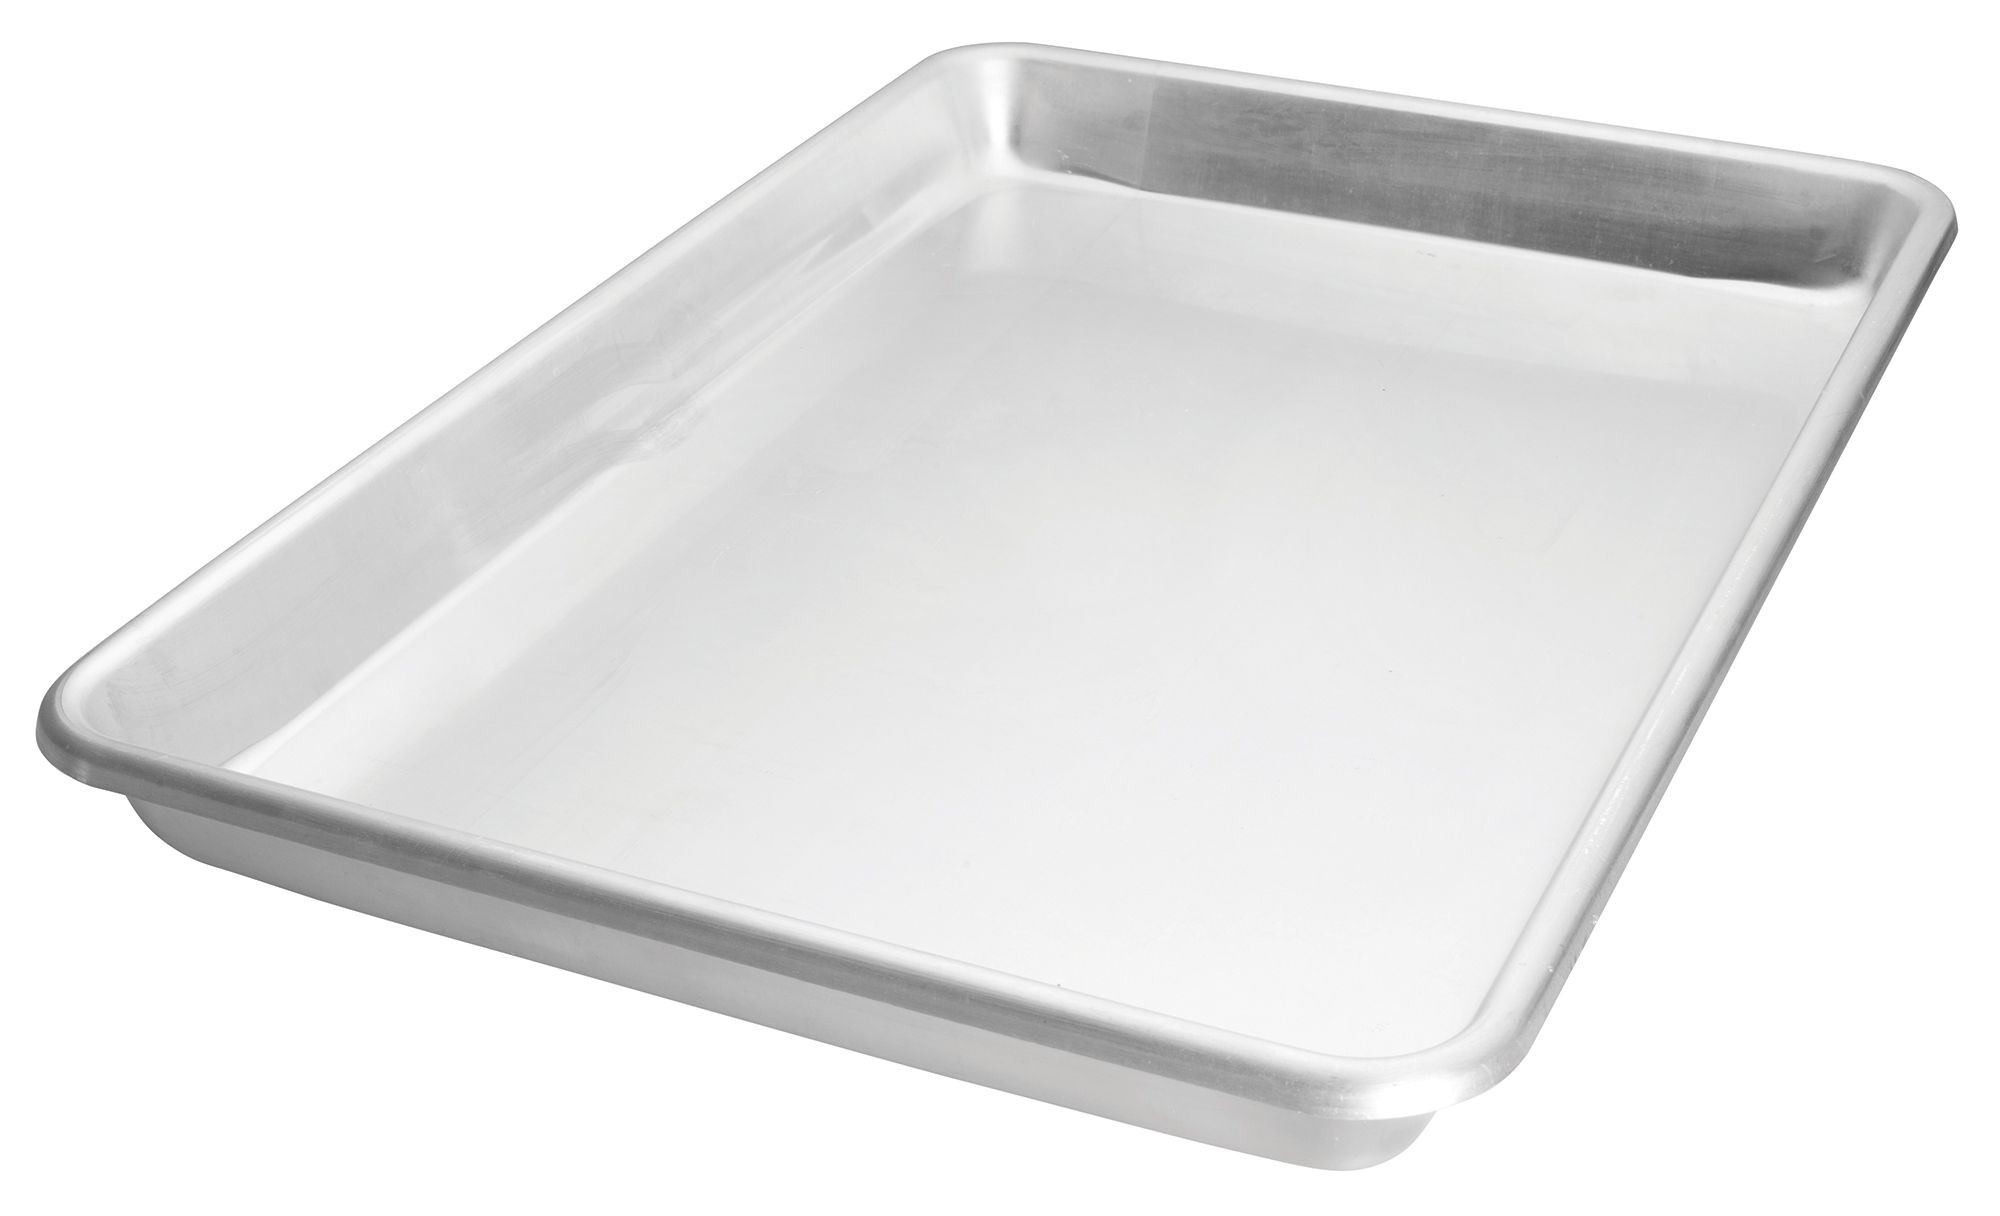 Winco ALRP-1826 Aluminum Bake/Roast Pan without Handles 25-3/4" x 17-3/4"